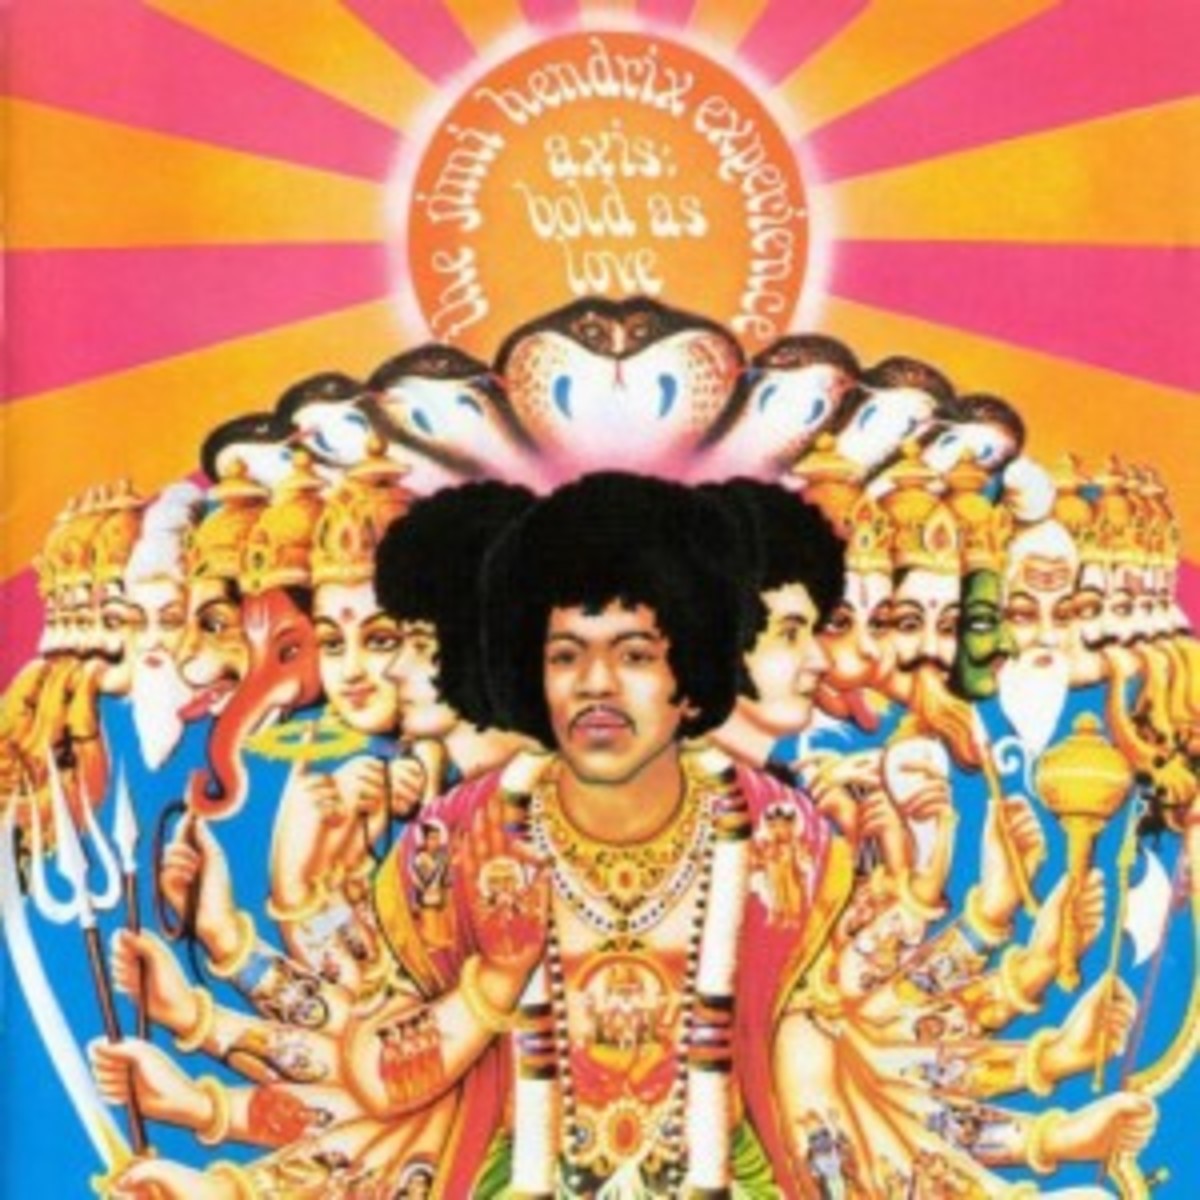 Jimi Hendrix Axis Bold As Love